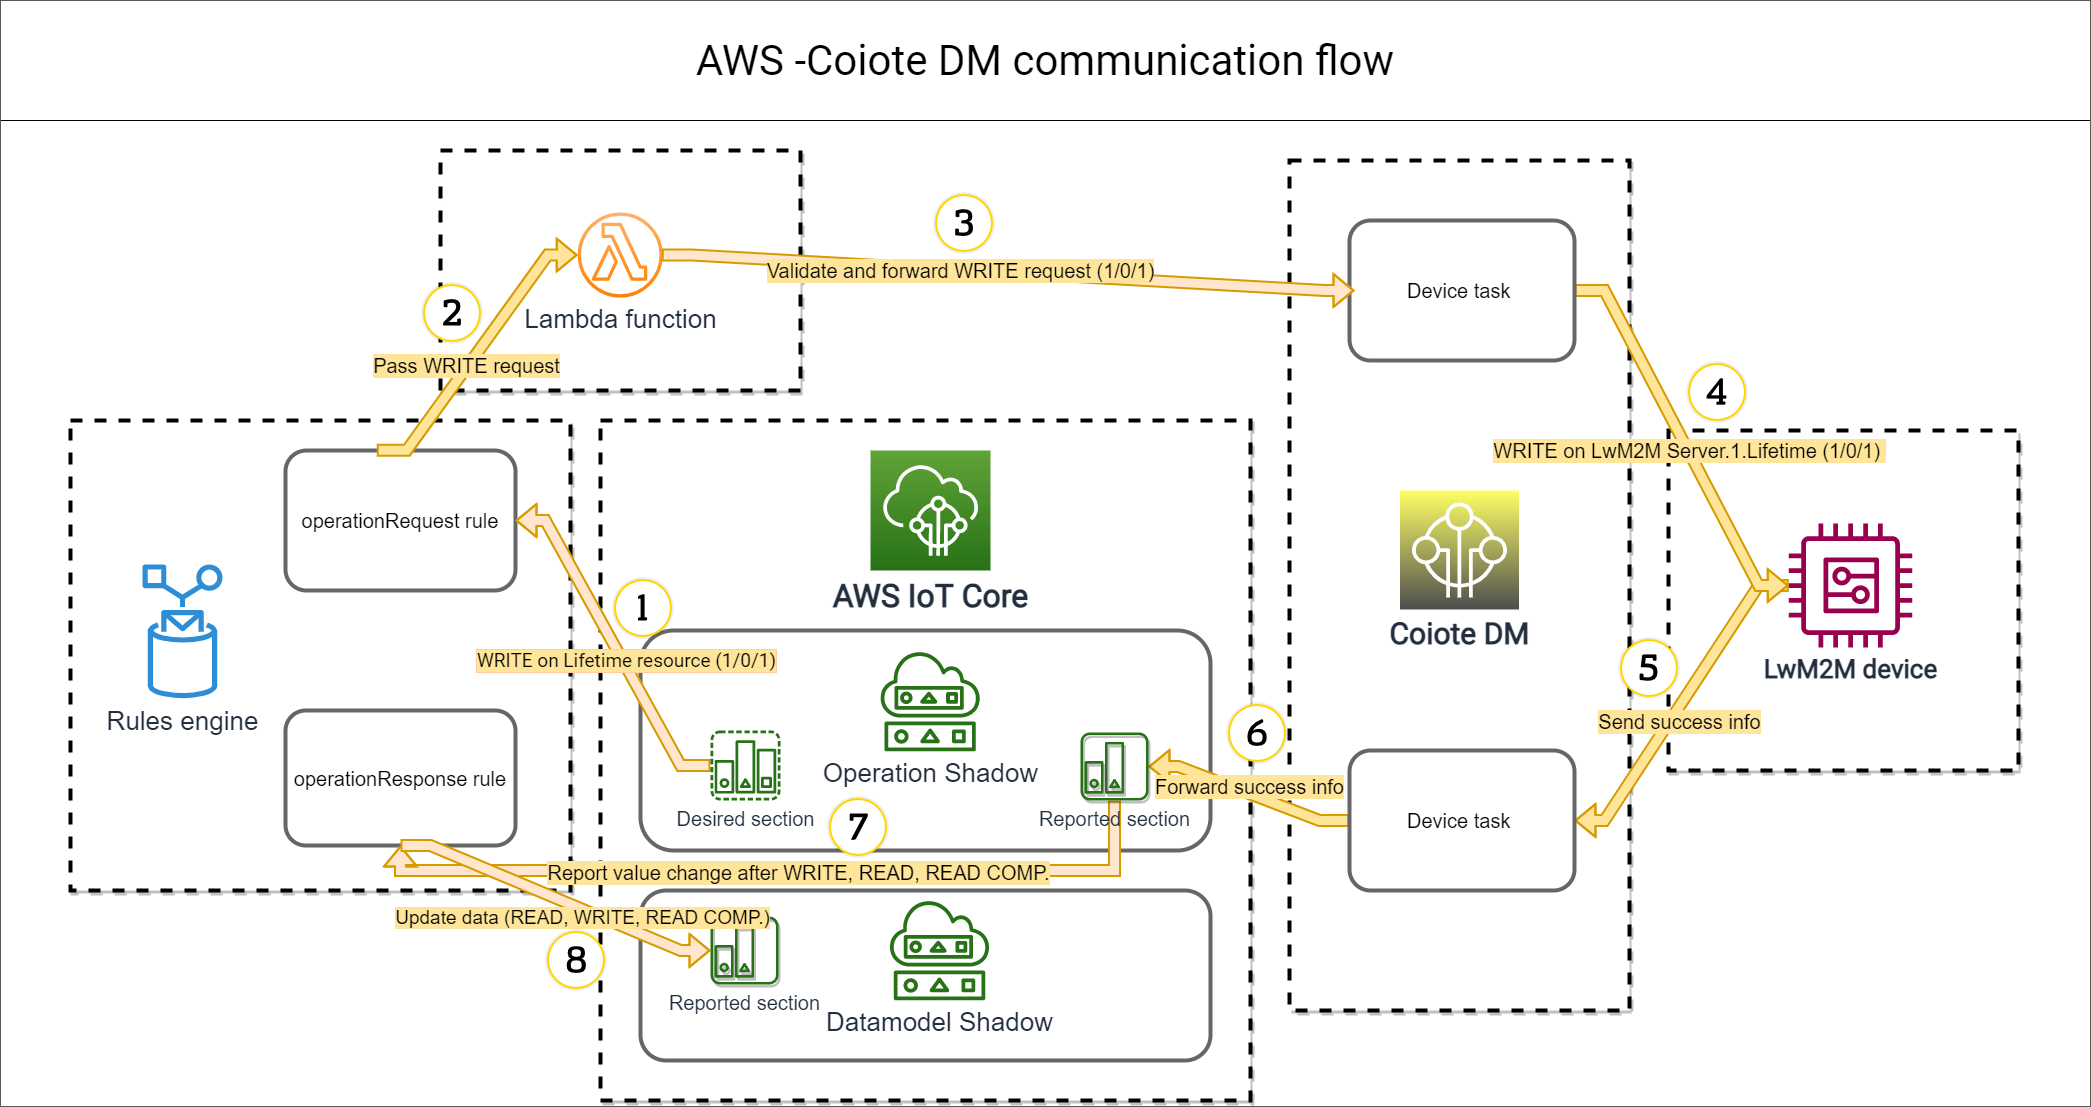 AWS - Coiote DM communication flow